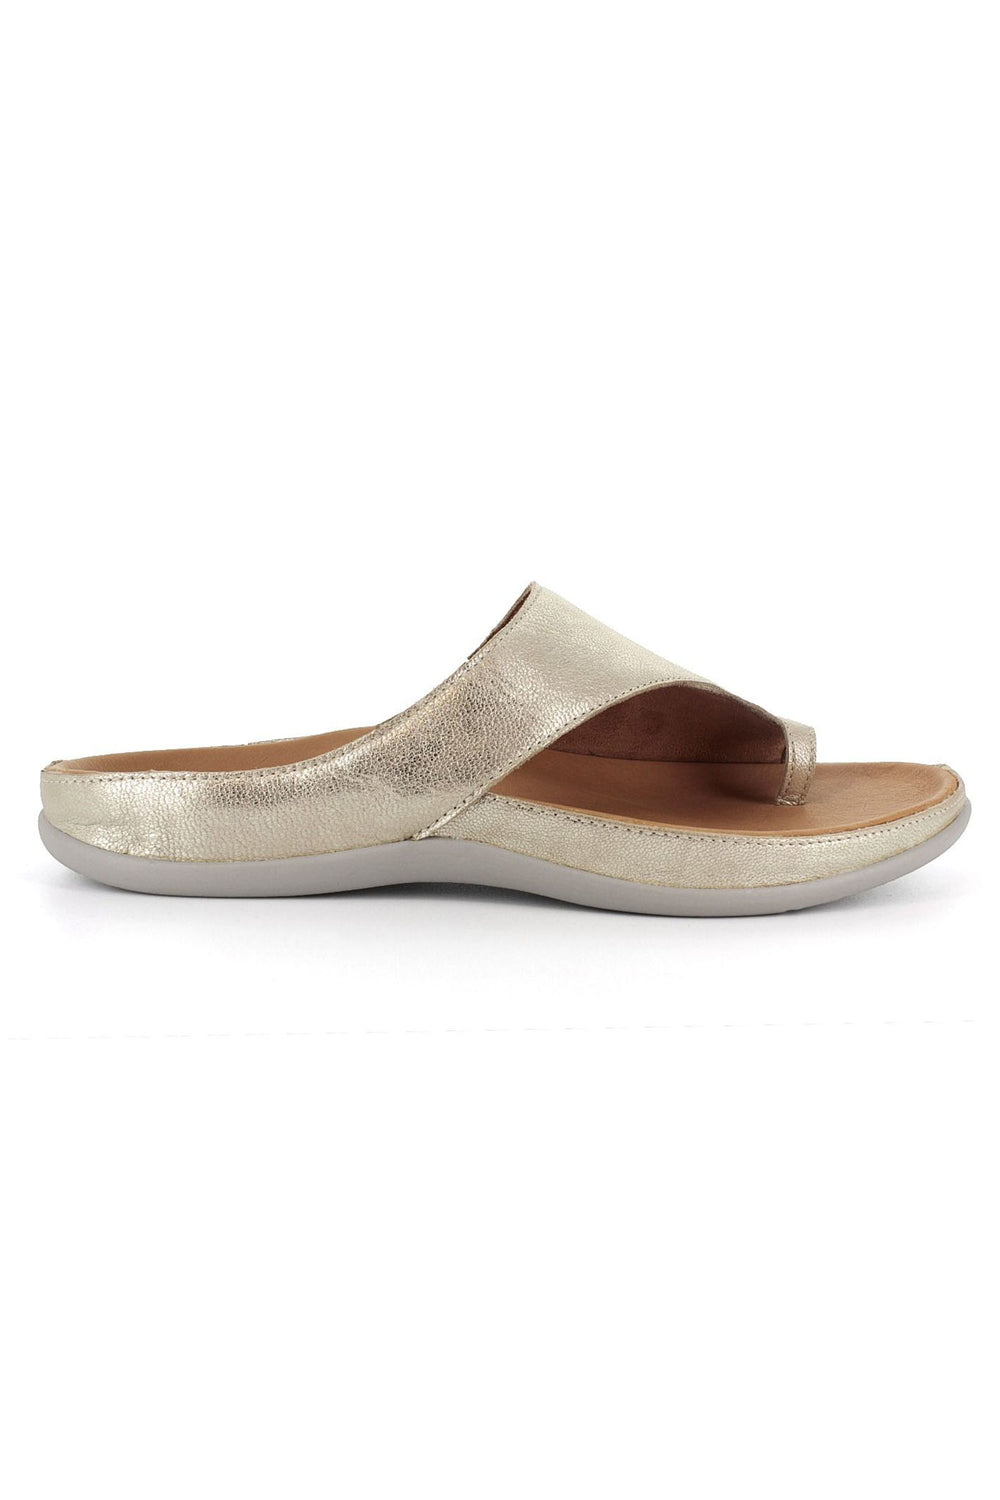 Strive Capri Gold Metallic Toe-Loop Leather Sandal - Shirley Allum Boutique